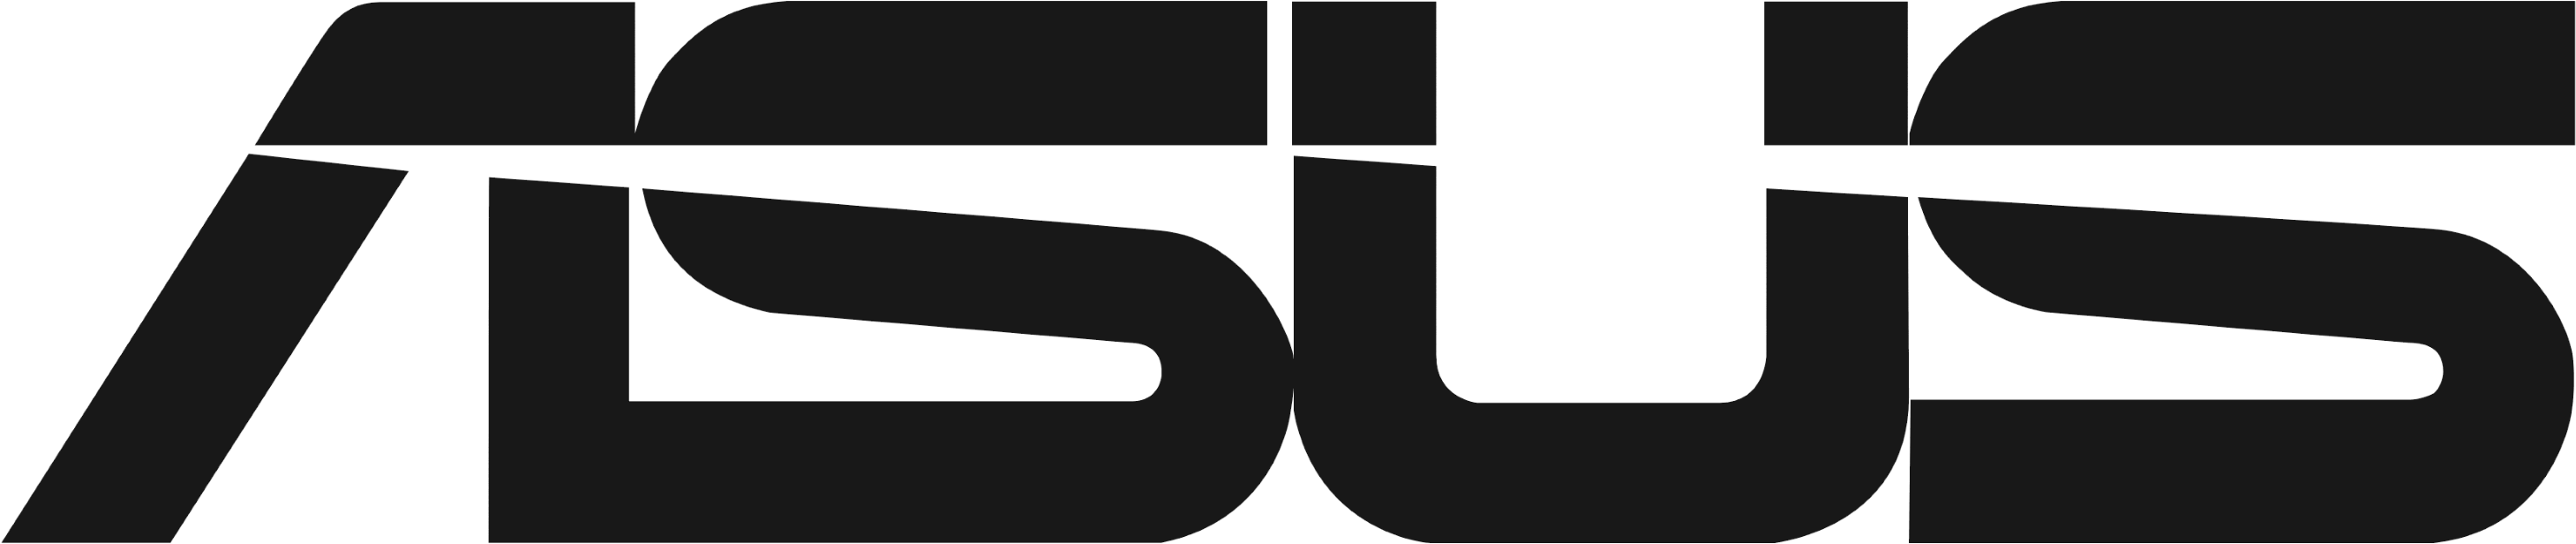 Asus Company Logo Black PNG image